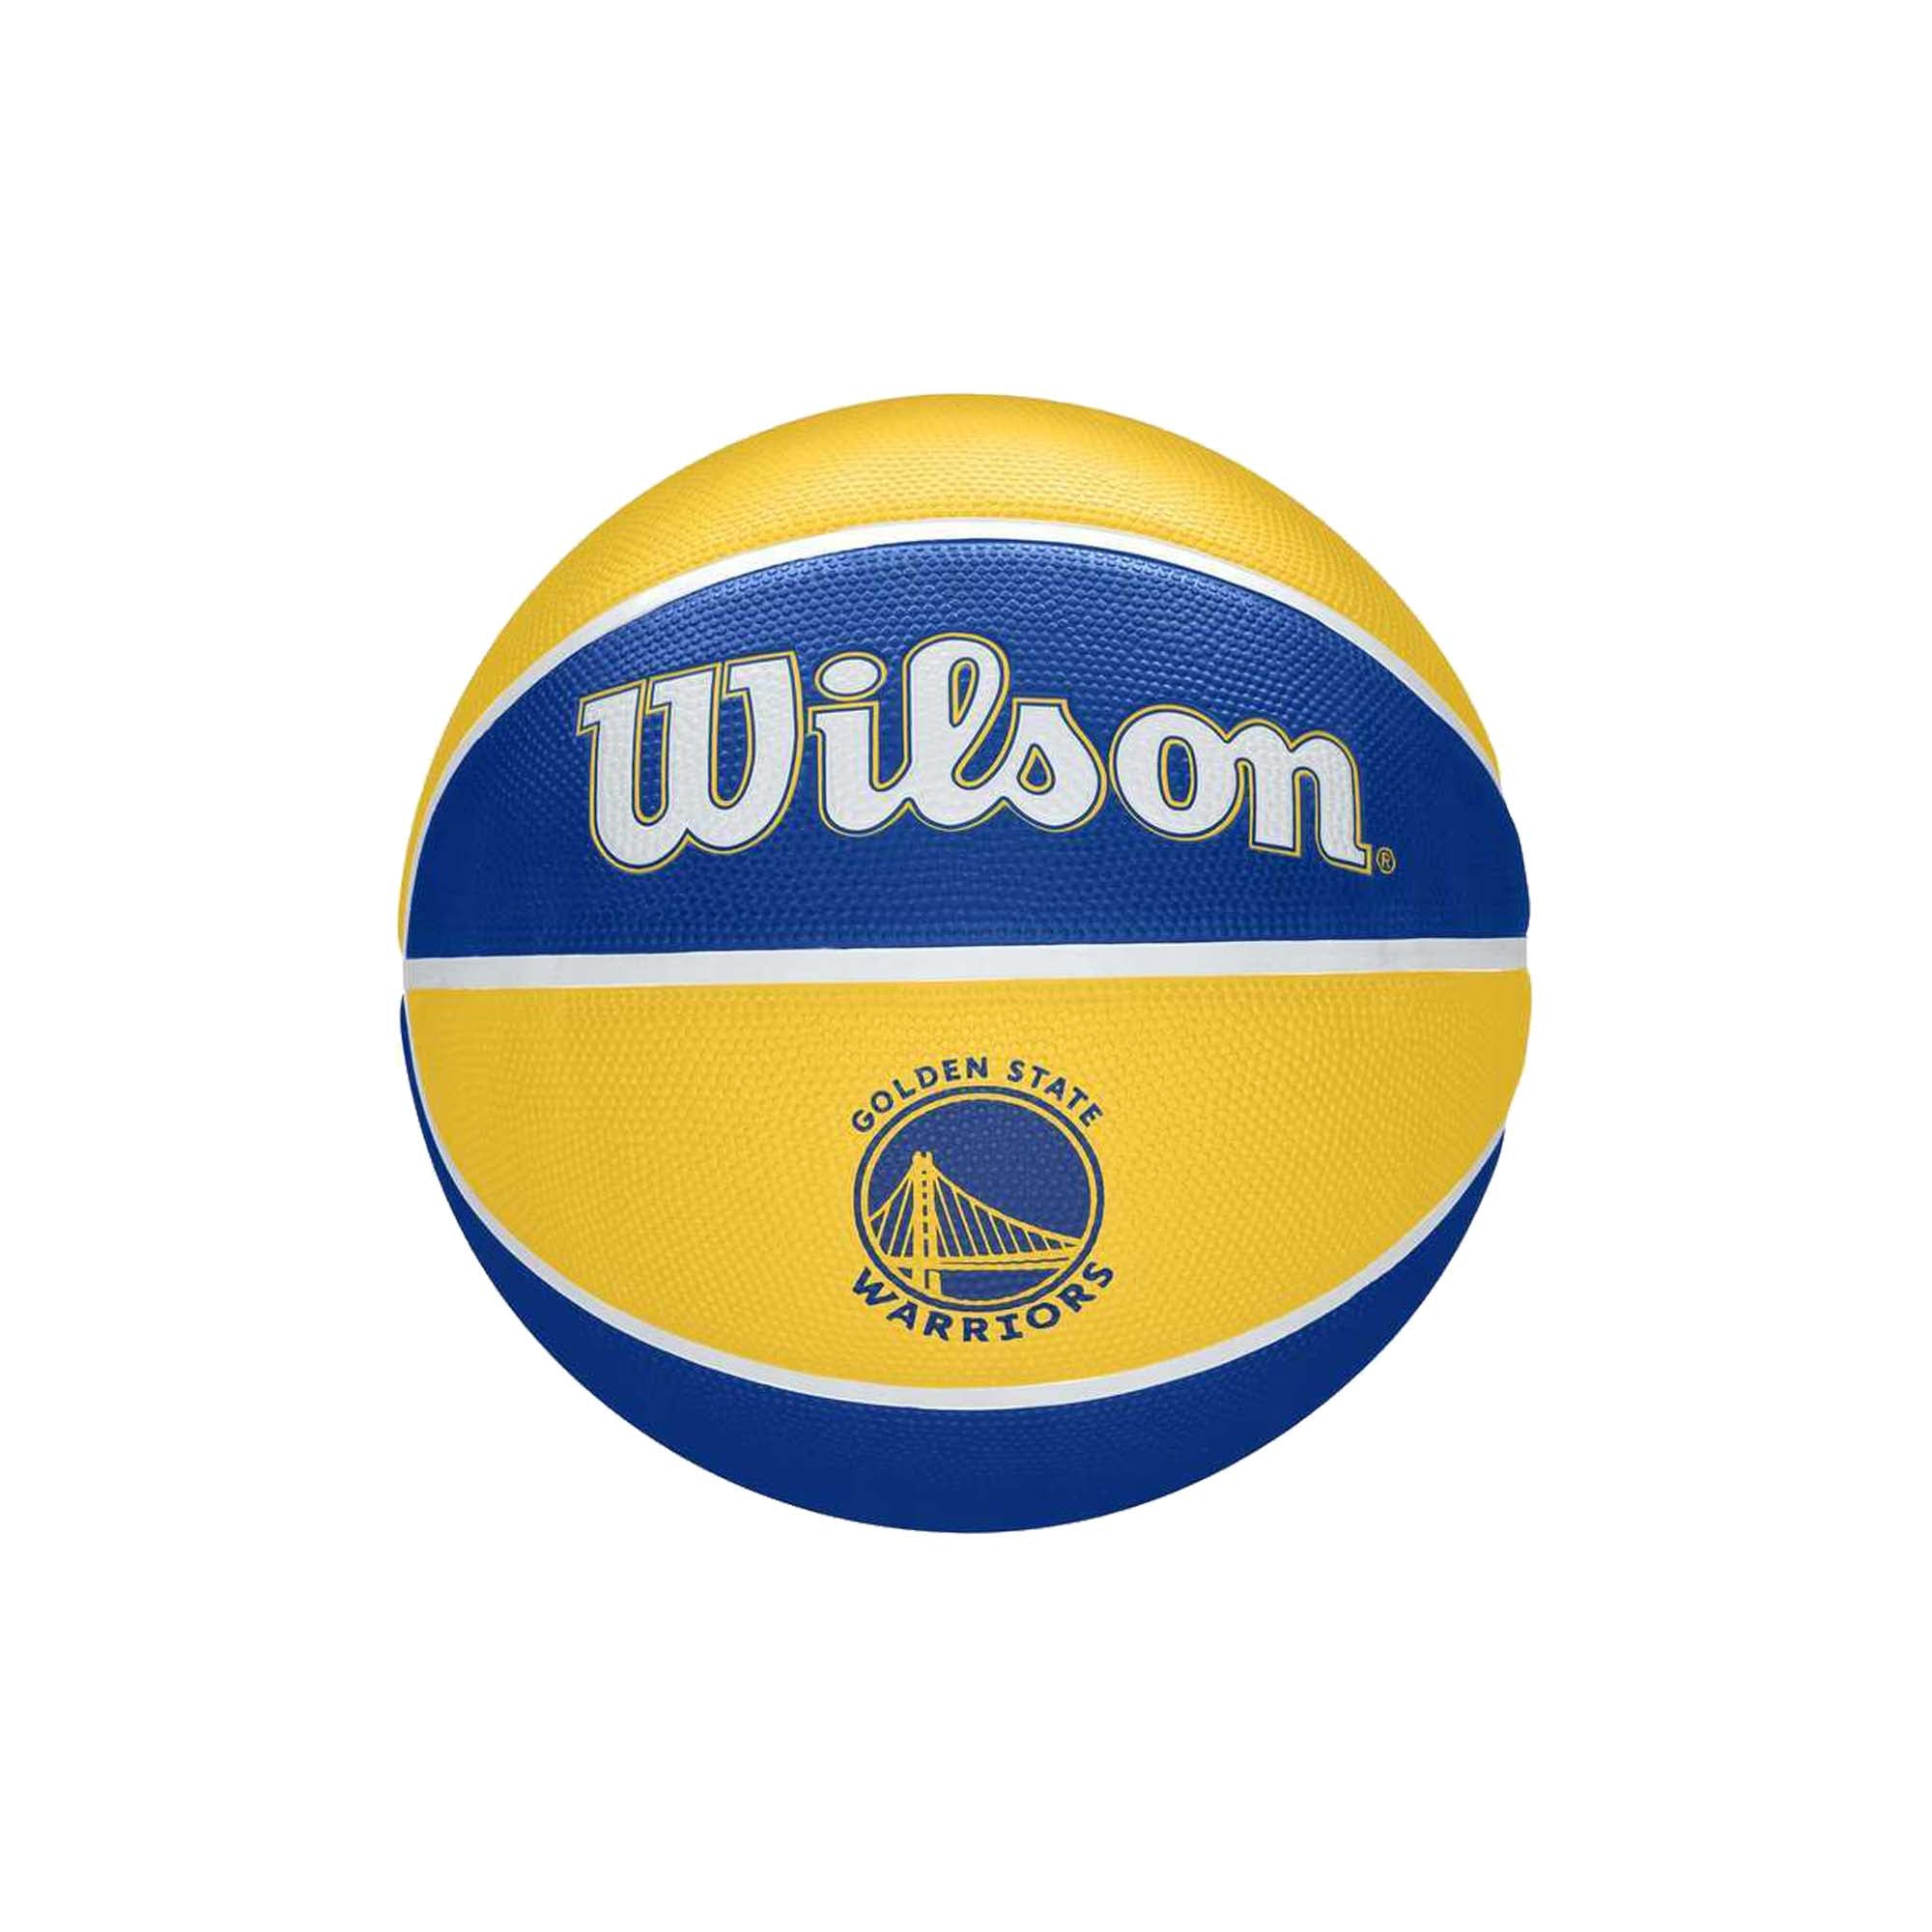 Wilson Basketbol Topu Nba Team Tribute Golden State Warrios Size:7 WTB1300XBGOL